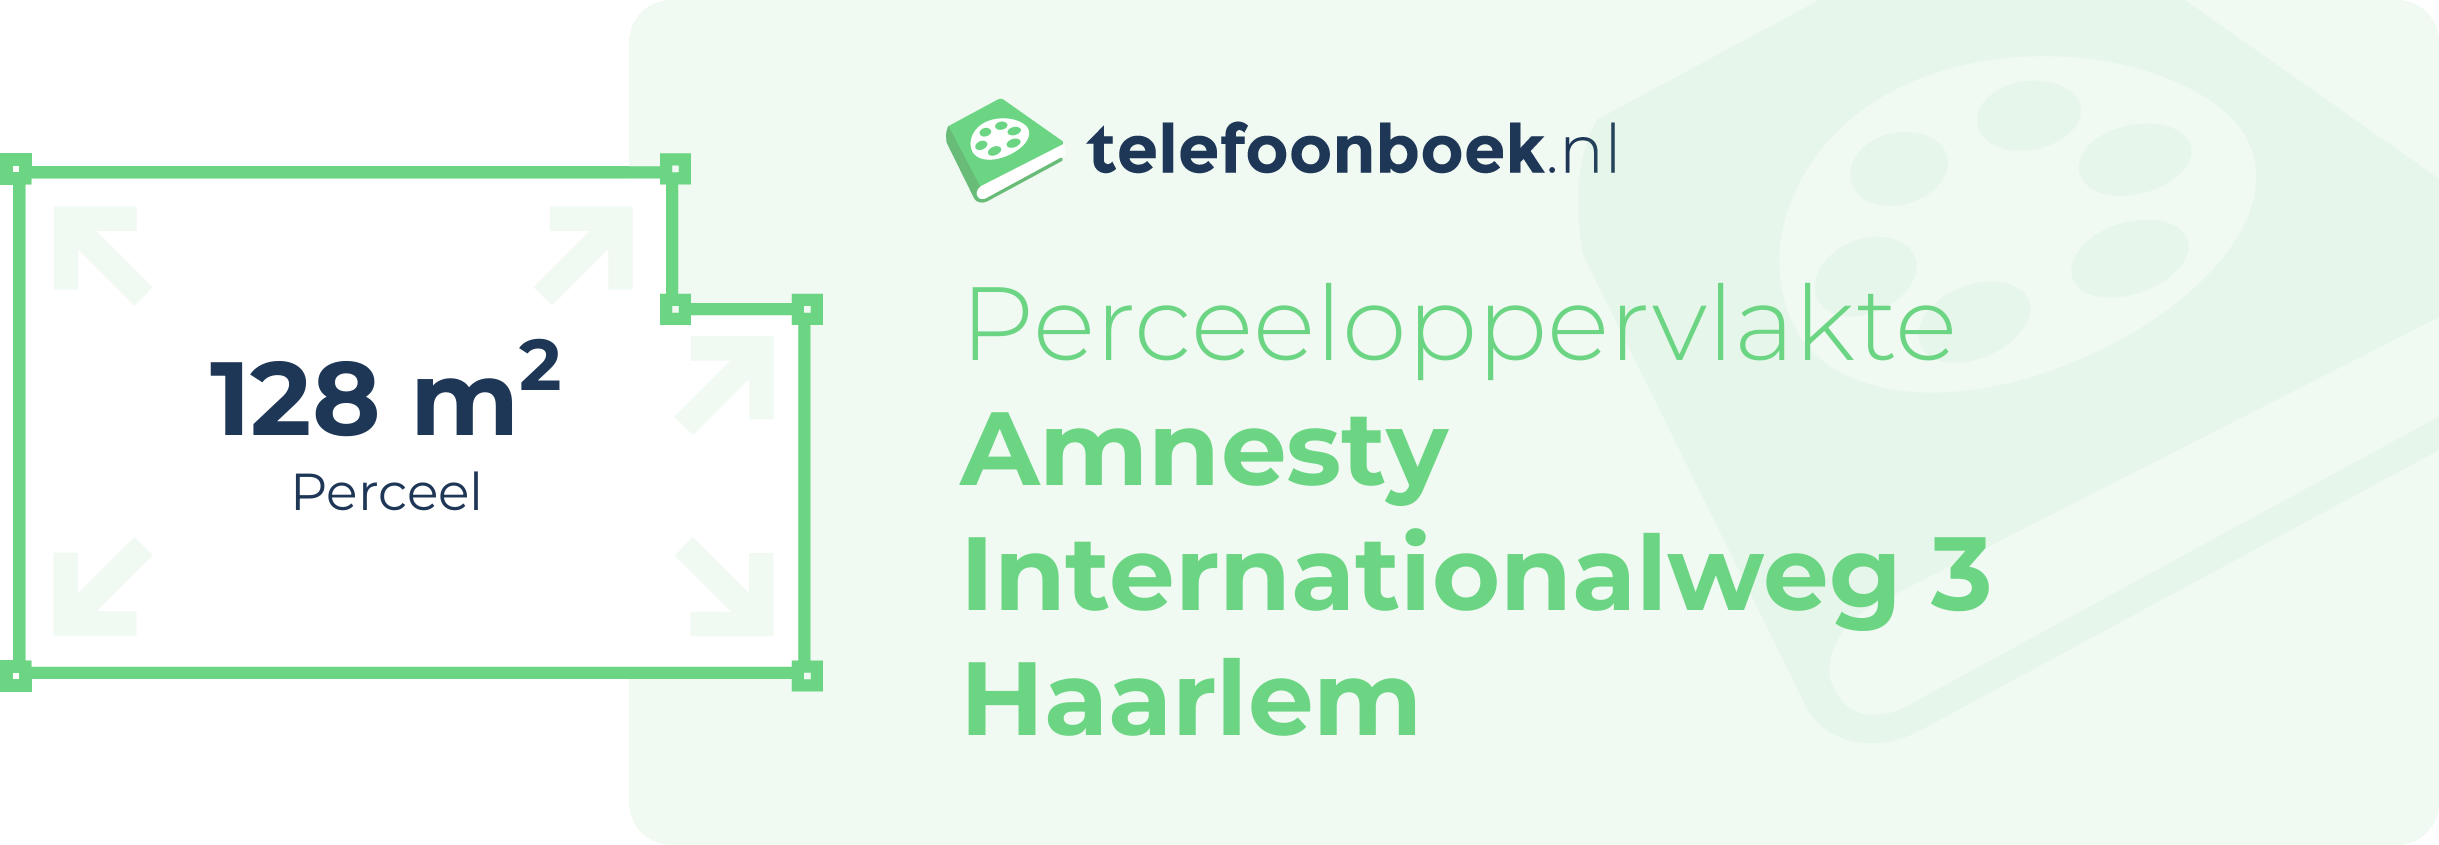 Perceeloppervlakte Amnesty Internationalweg 3 Haarlem